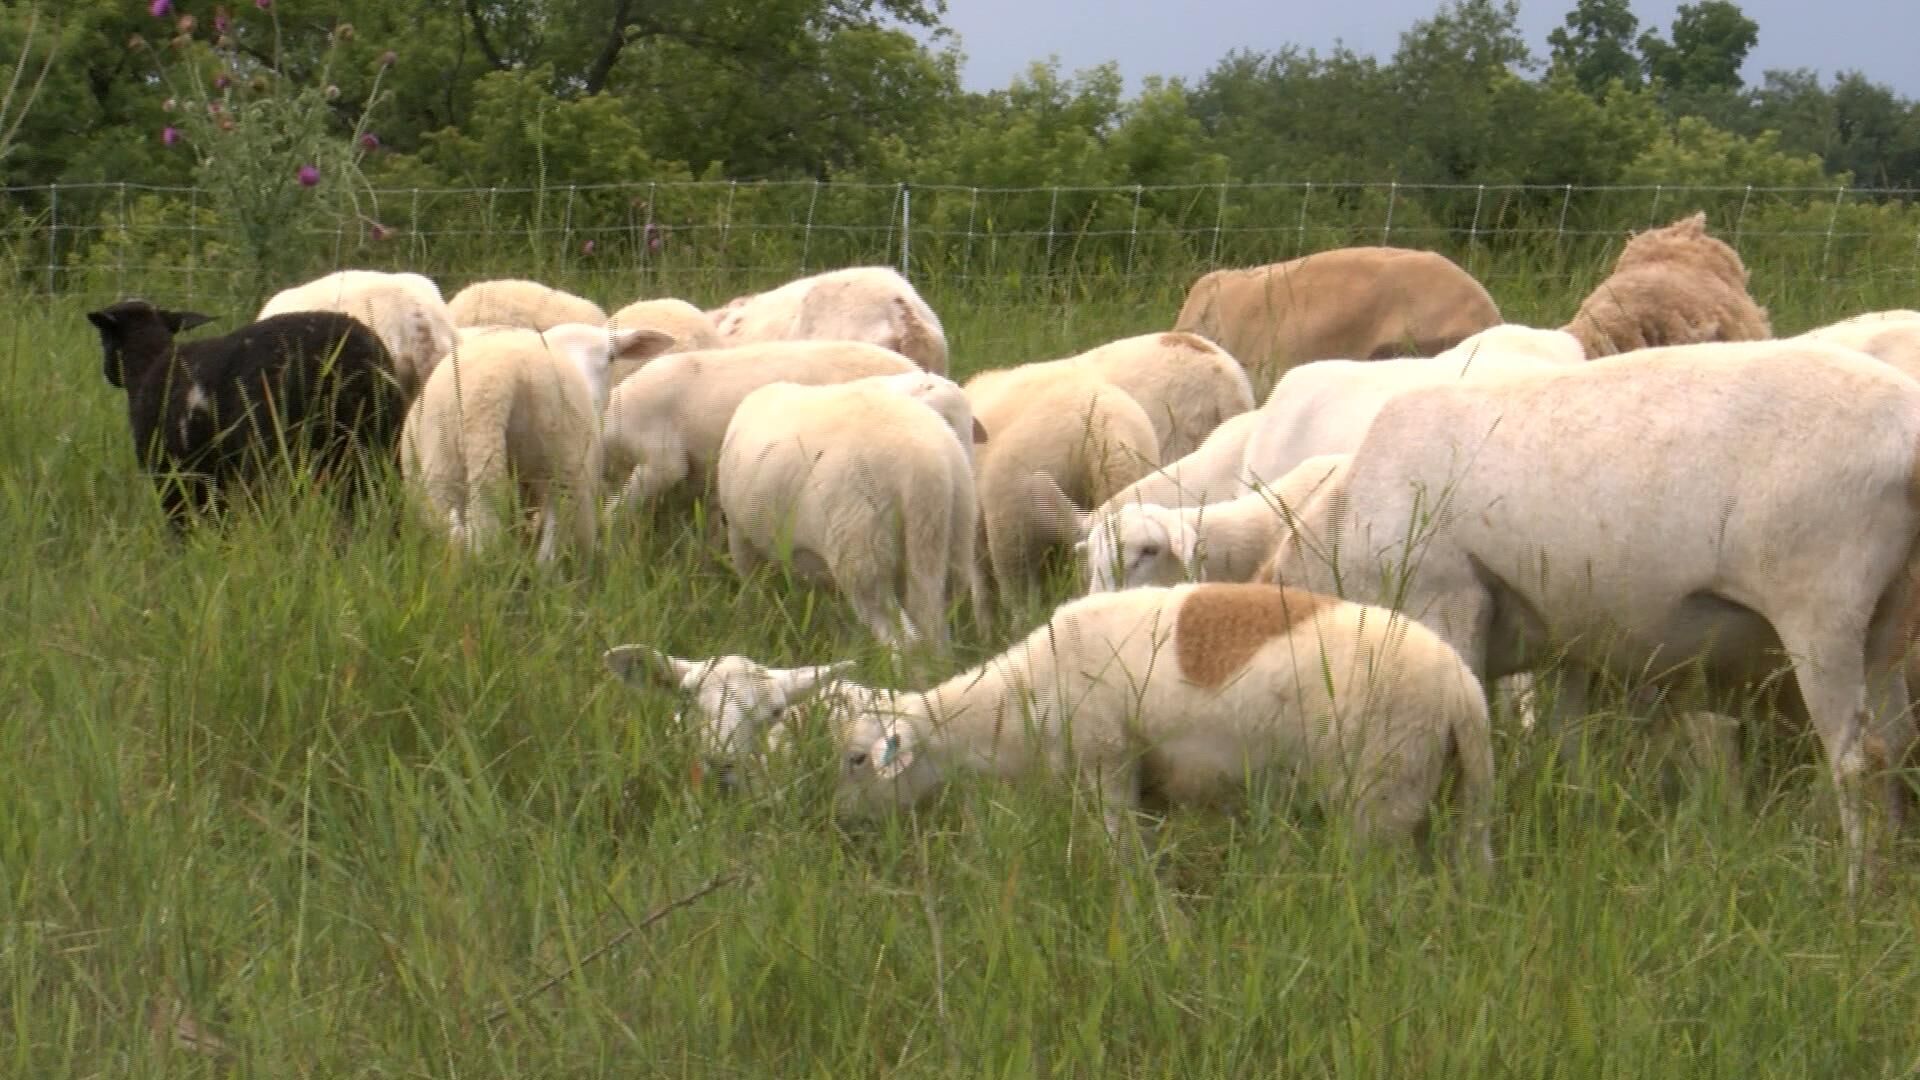 Aiding livestock in Summer heat | News | wxow.com